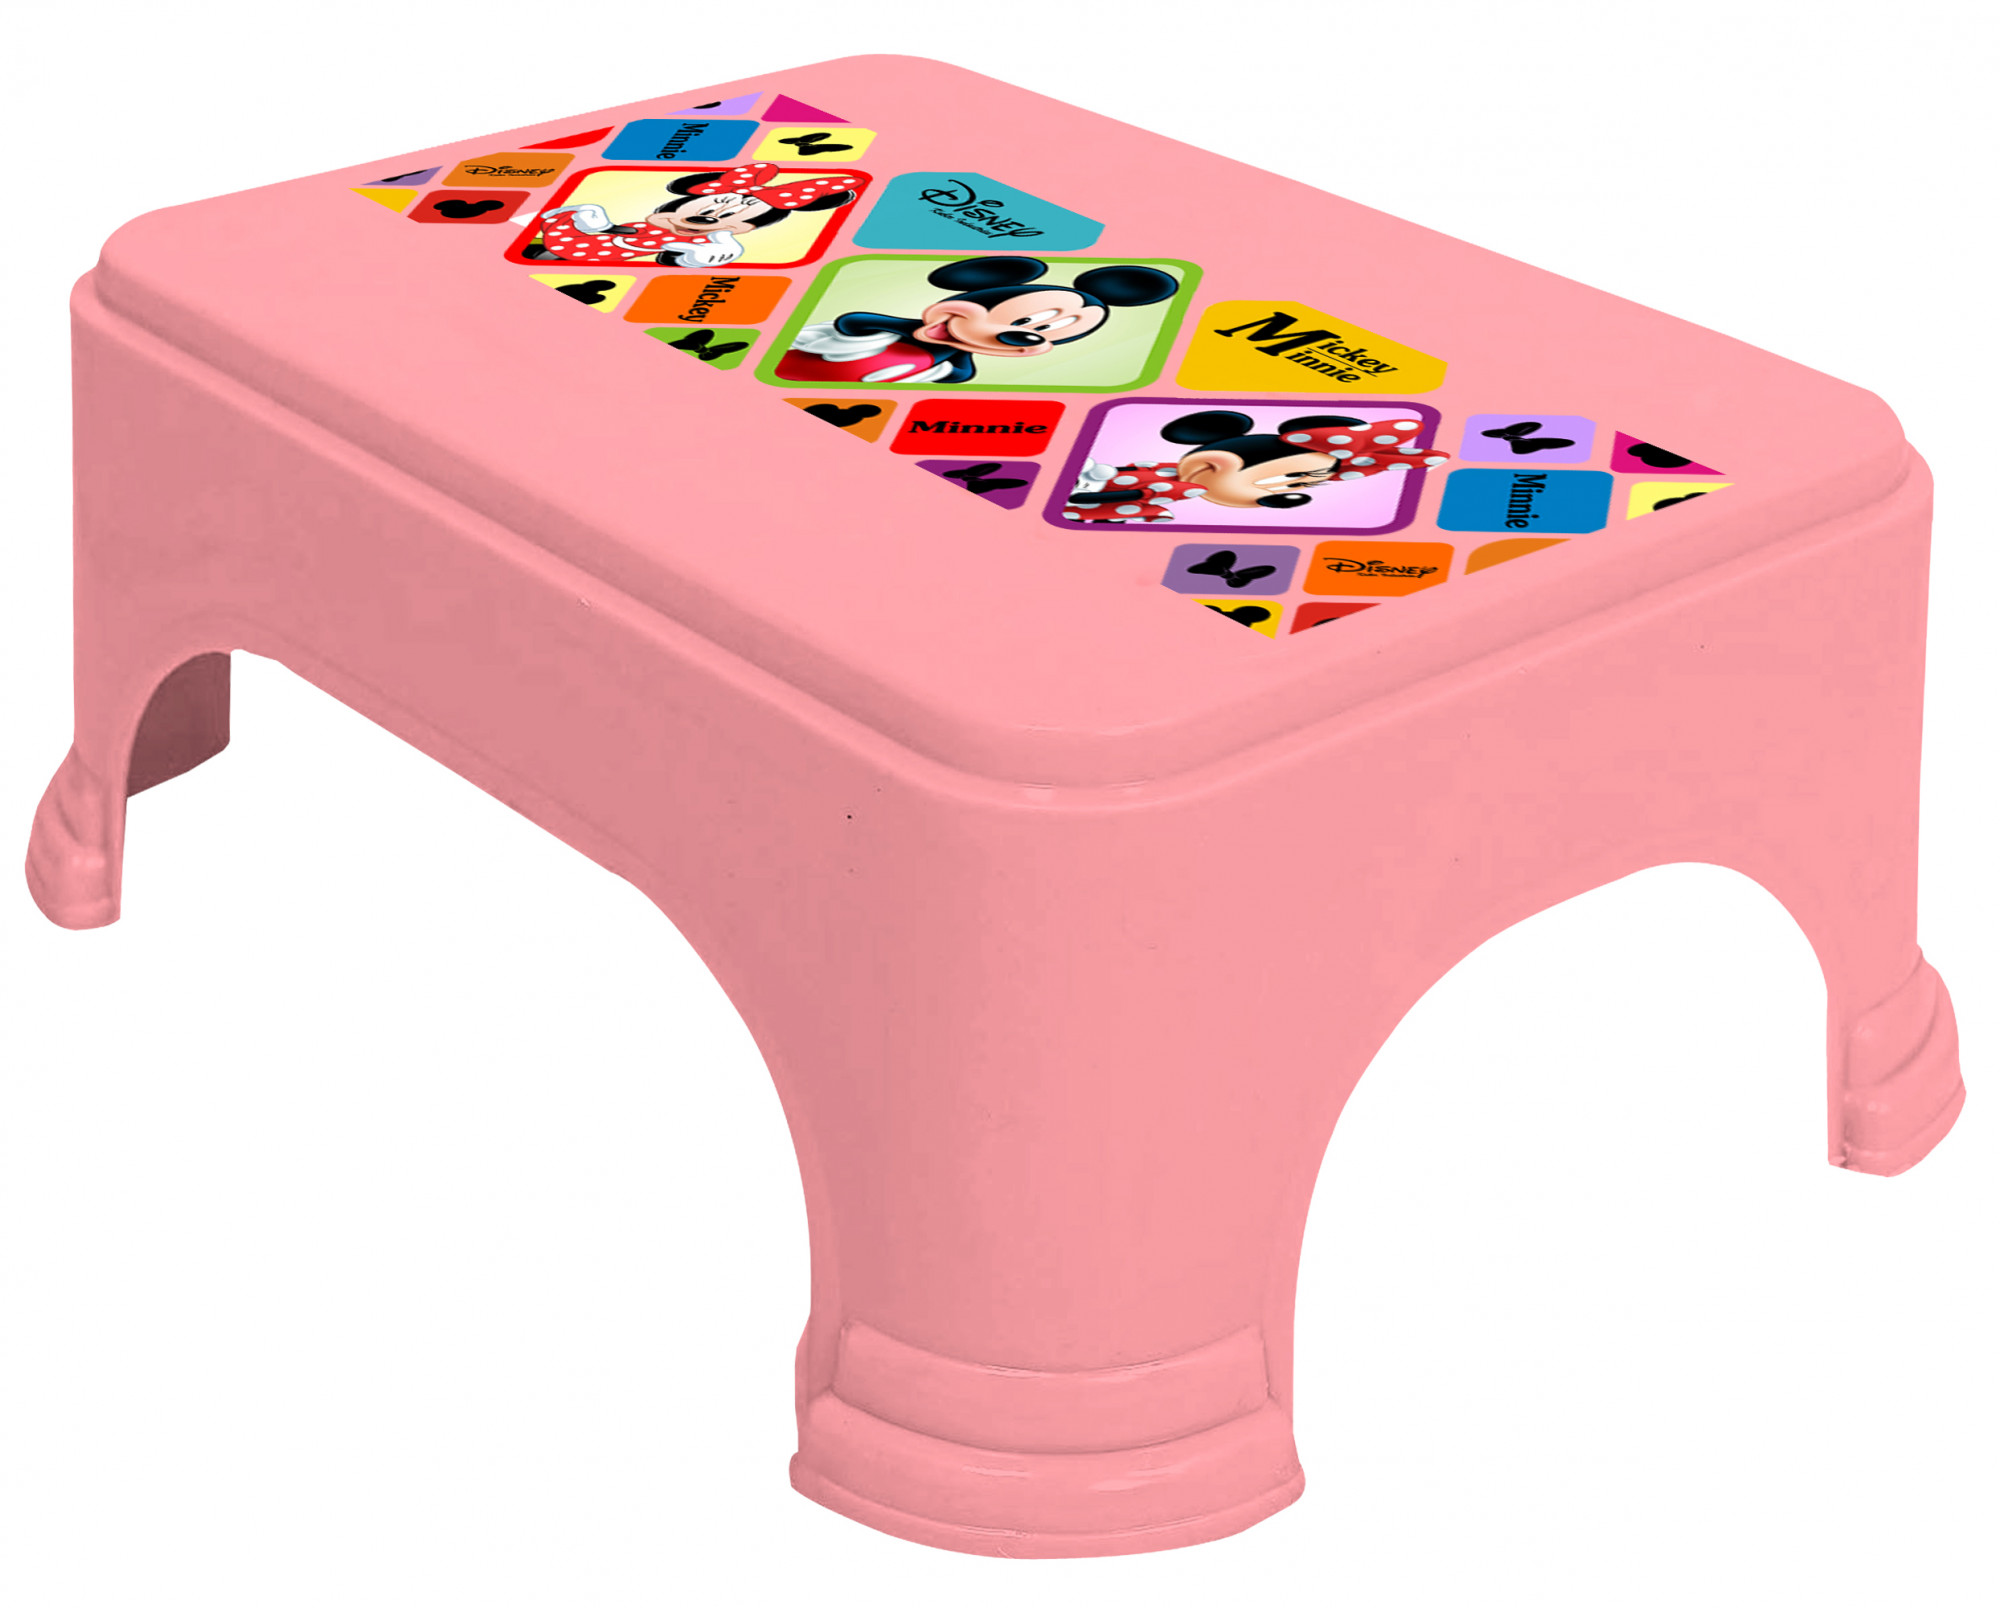 Kuber Industries Disney Mickey Minnie Print Plastic Bathroom Set of 5 Pieces with Bucket, Tub, Stool, Dustbin & Mug (Pink)-KUBMART15273 -HS_35_KUBMART17961